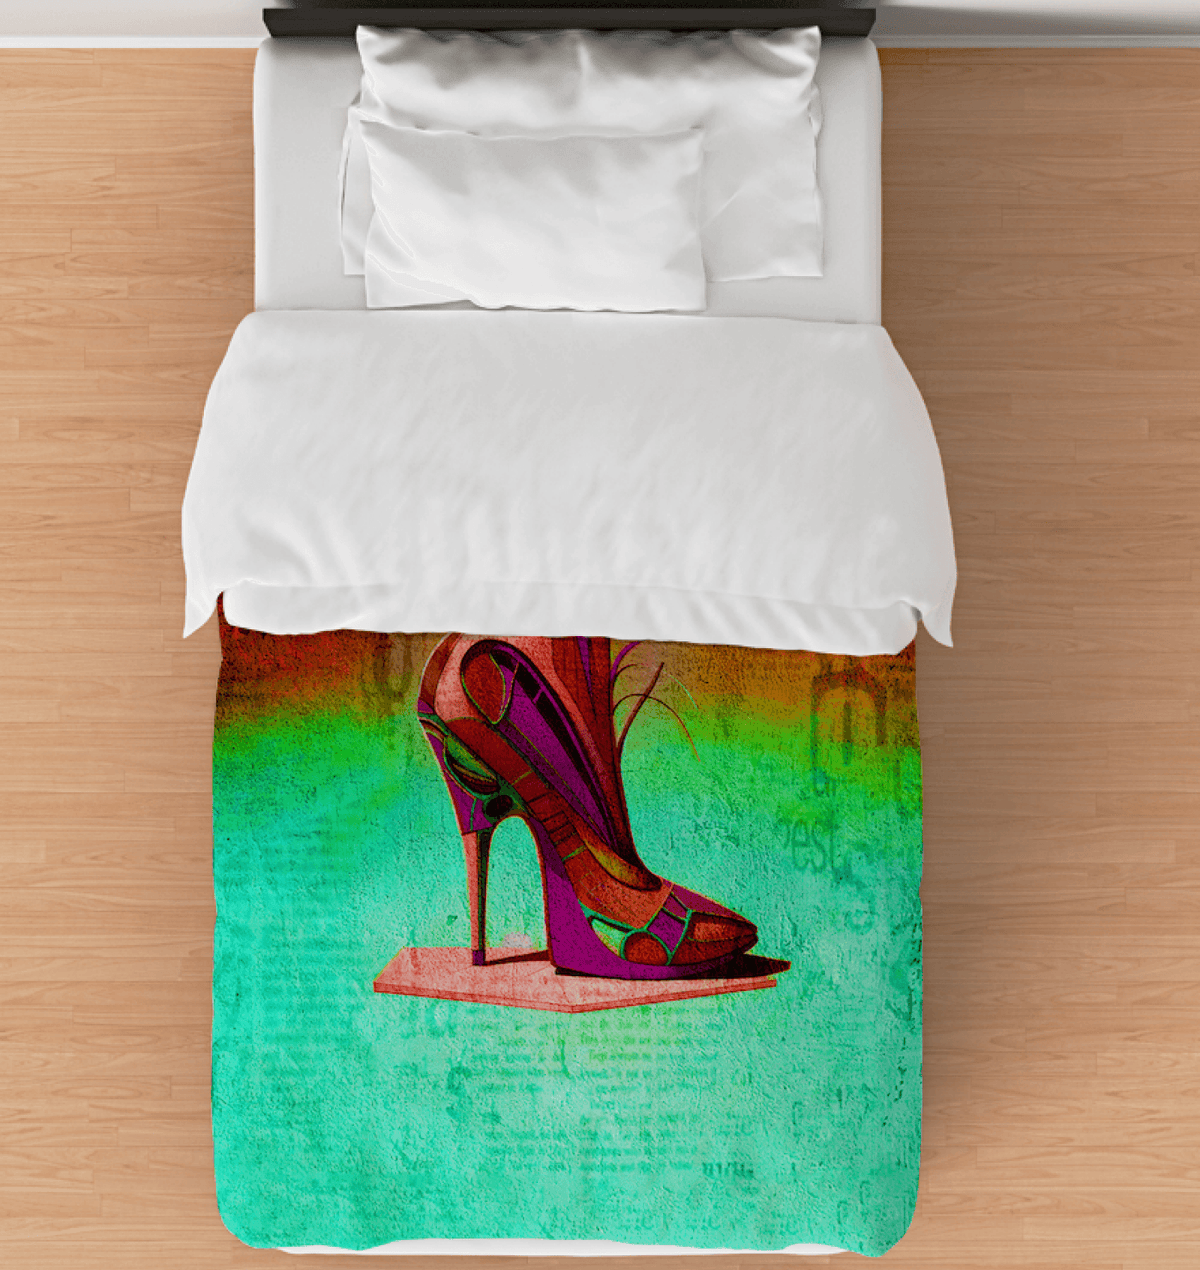 Tech-Chic Footwear Bedding Sanctuary - Beyond T-shirts